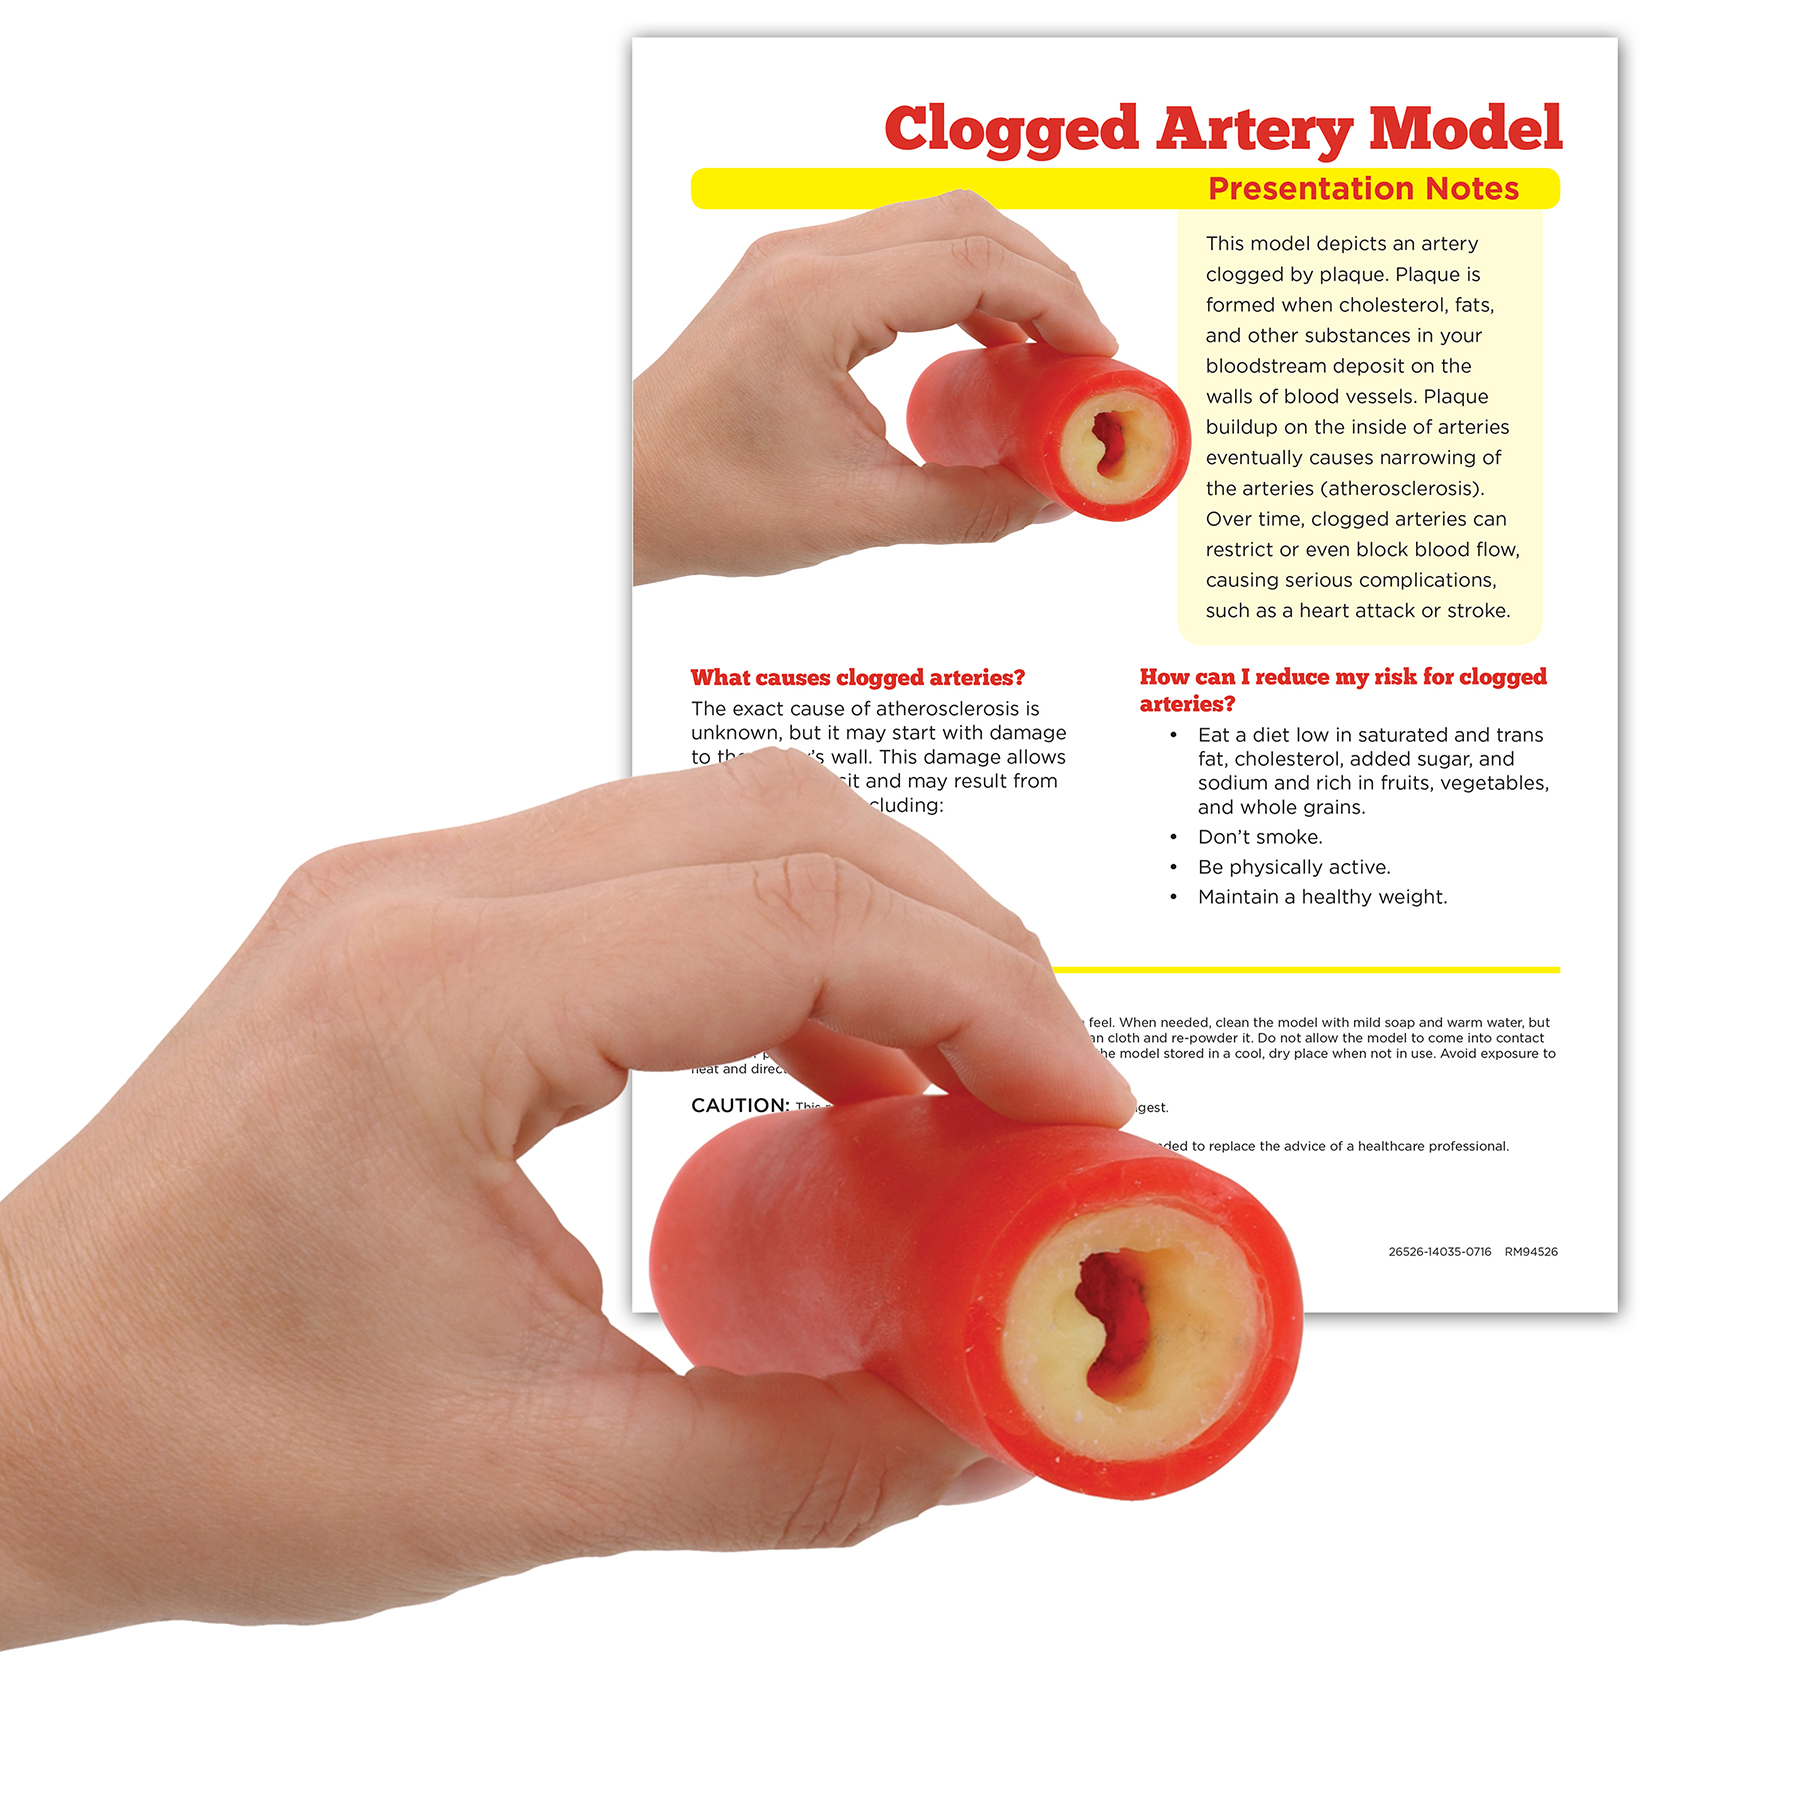 Clogged Artery Model from Health Edco